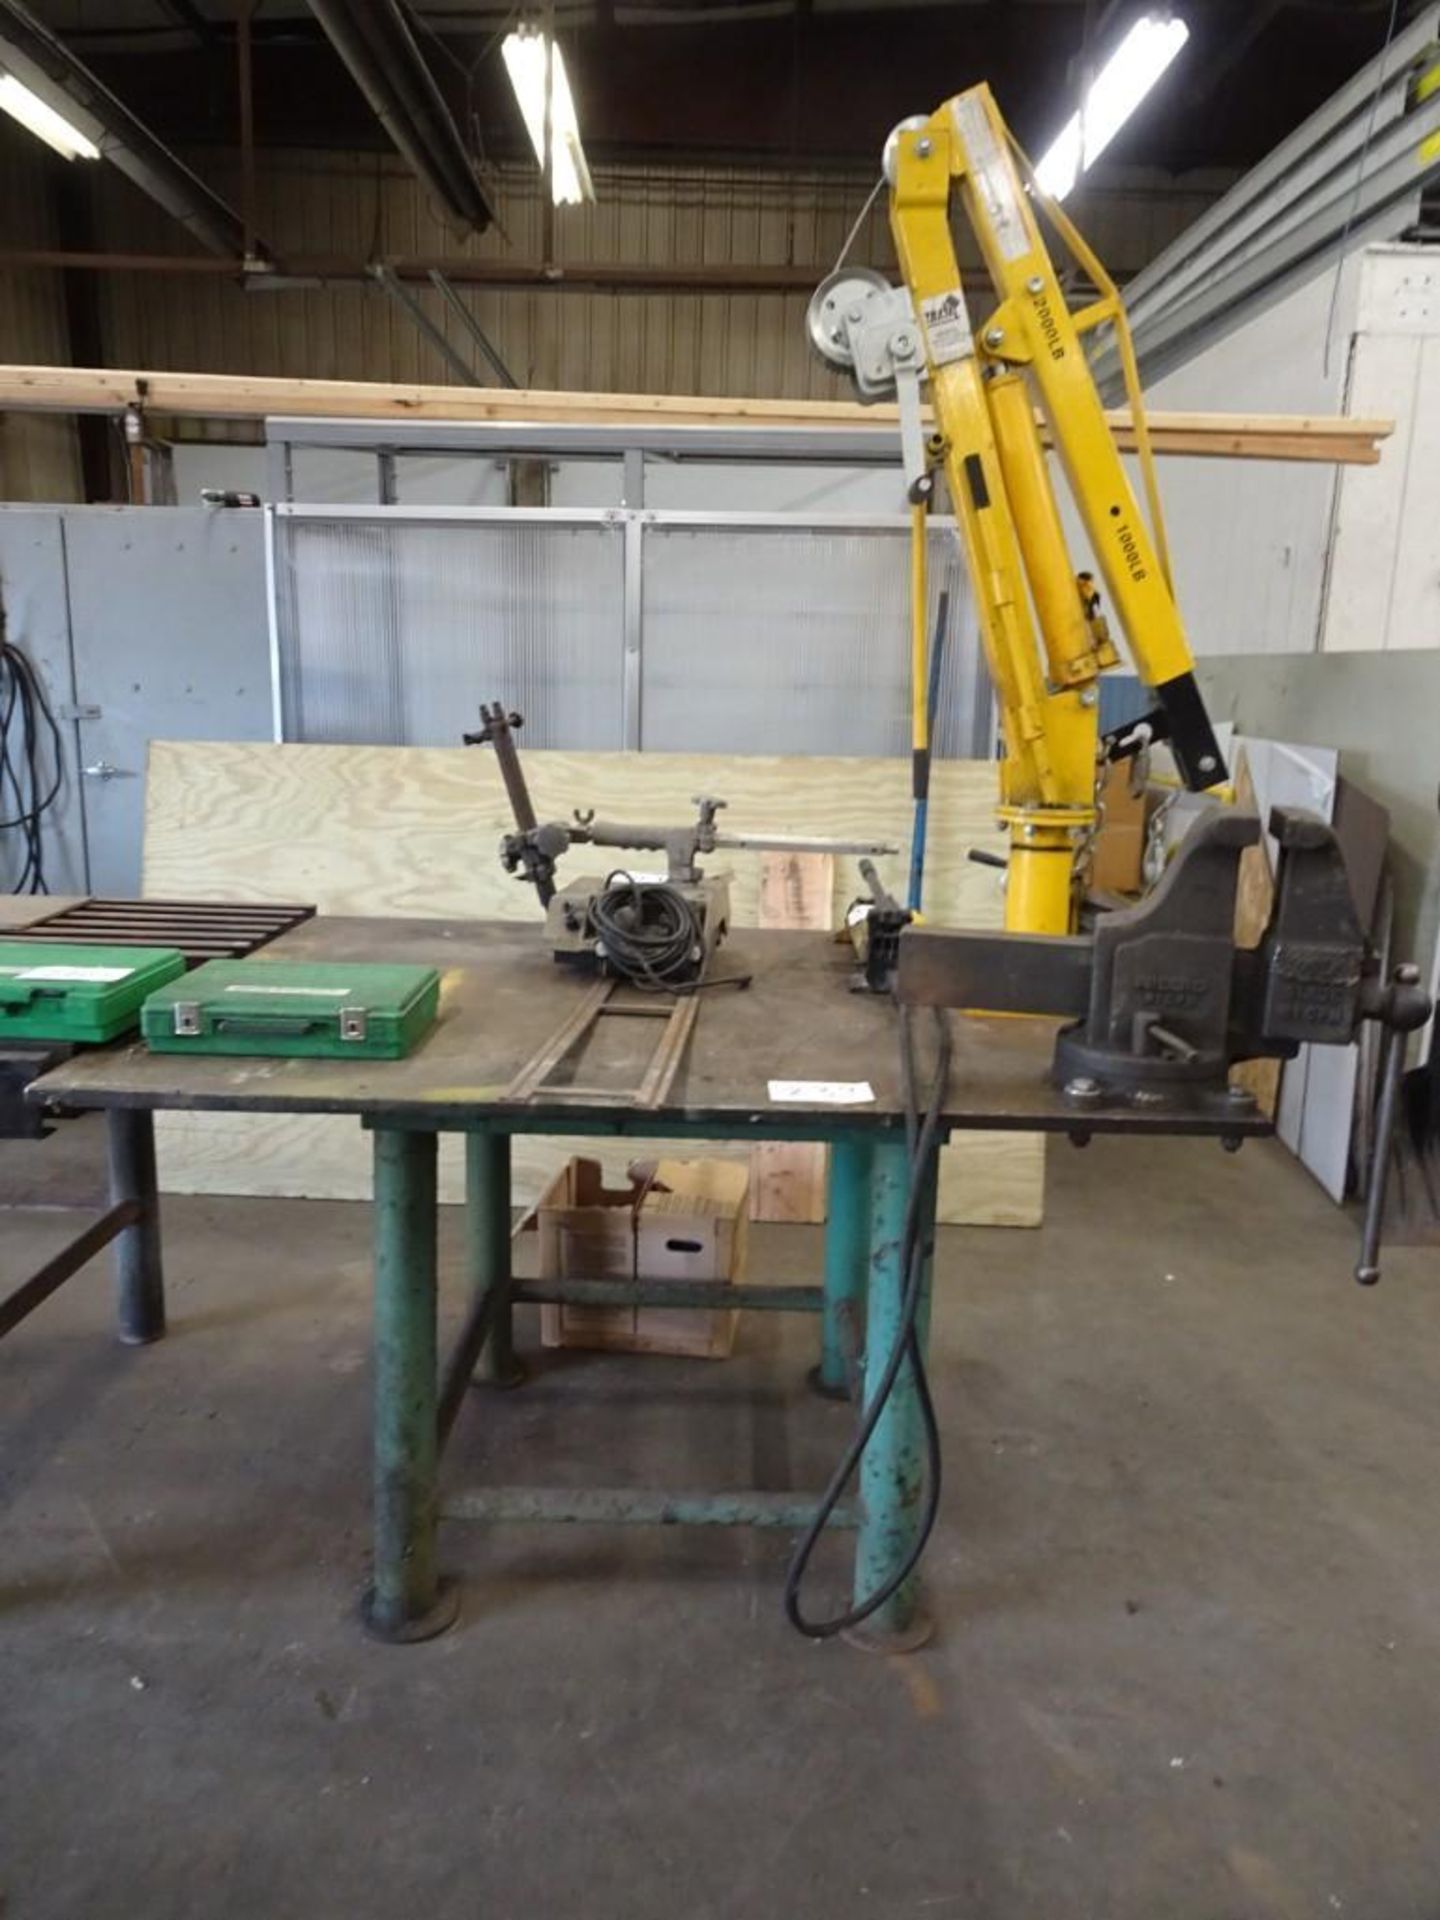 Steel Workbench w/ (1) Ridgid Tabletop Vice Grip and (1) Vestil Jib Crane